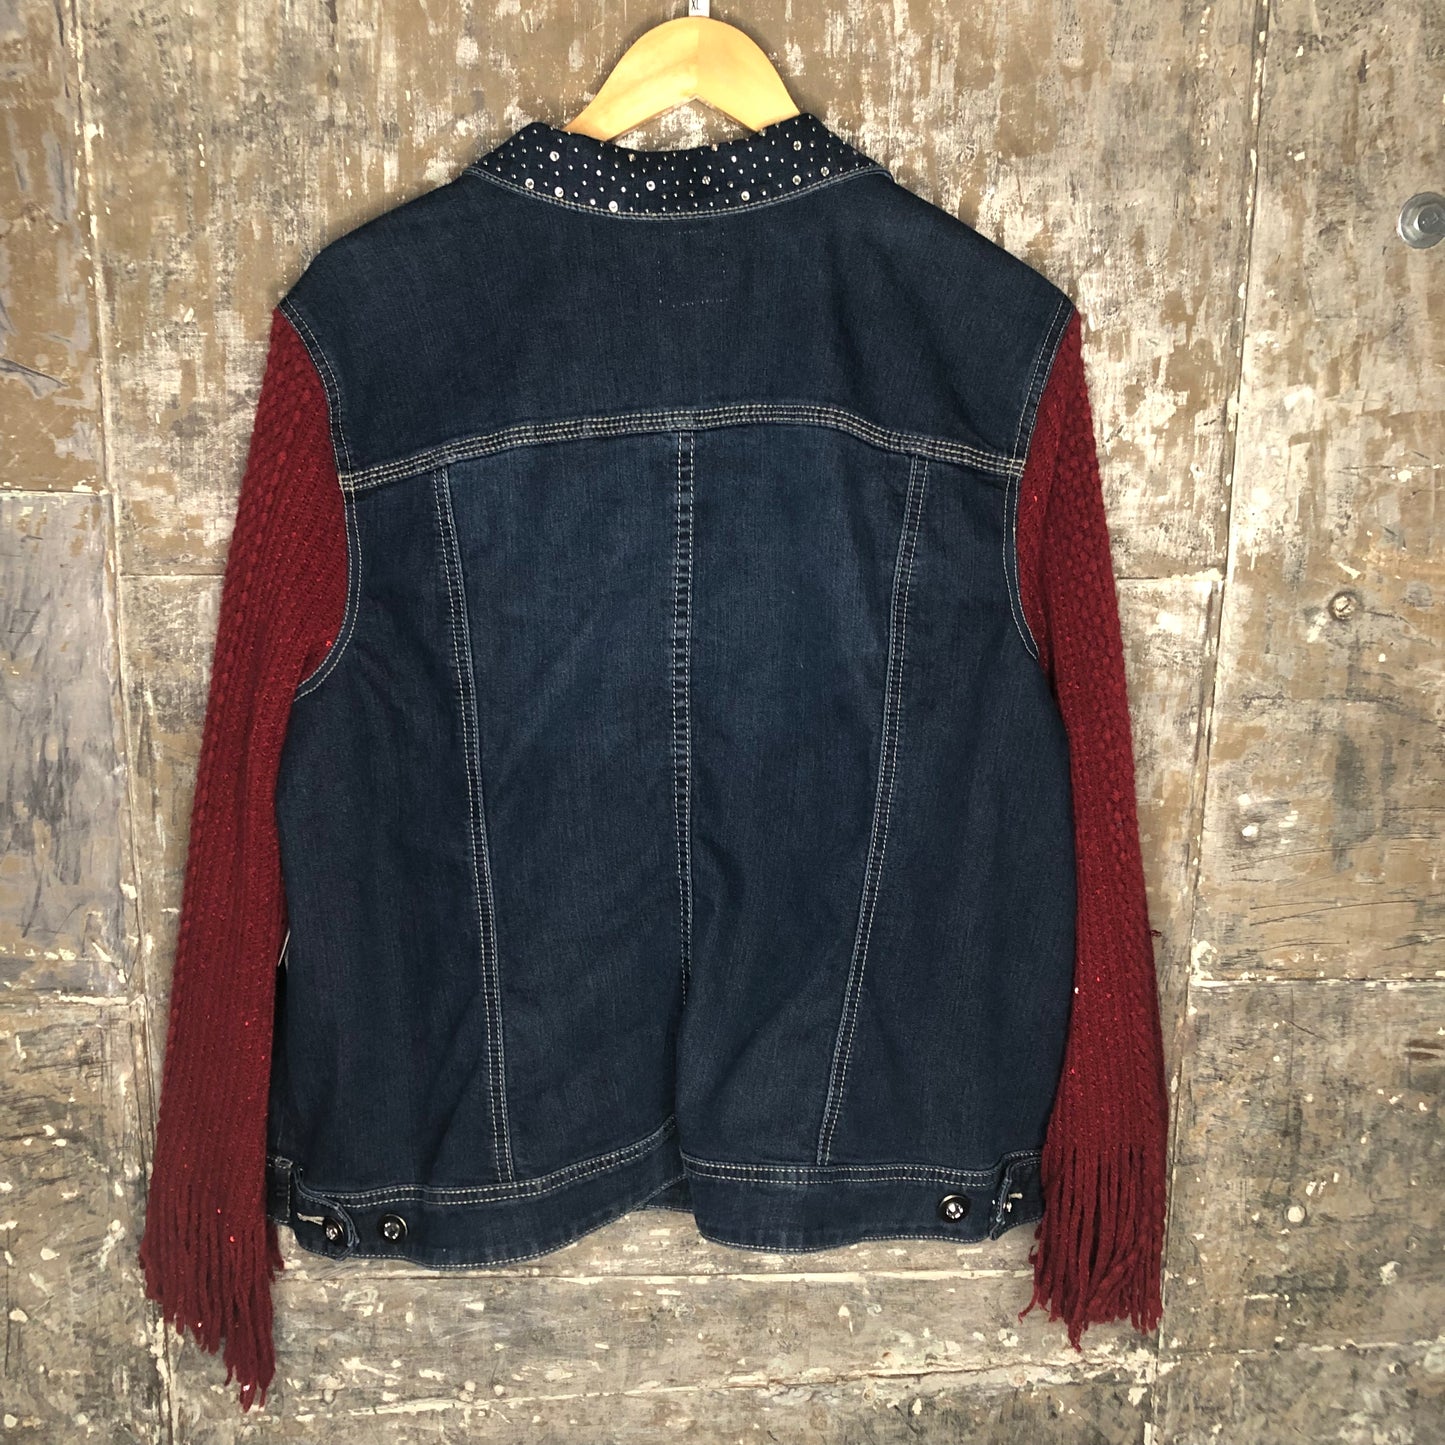 cuddly cranberry knit + blinged blue denim jacket, 2x